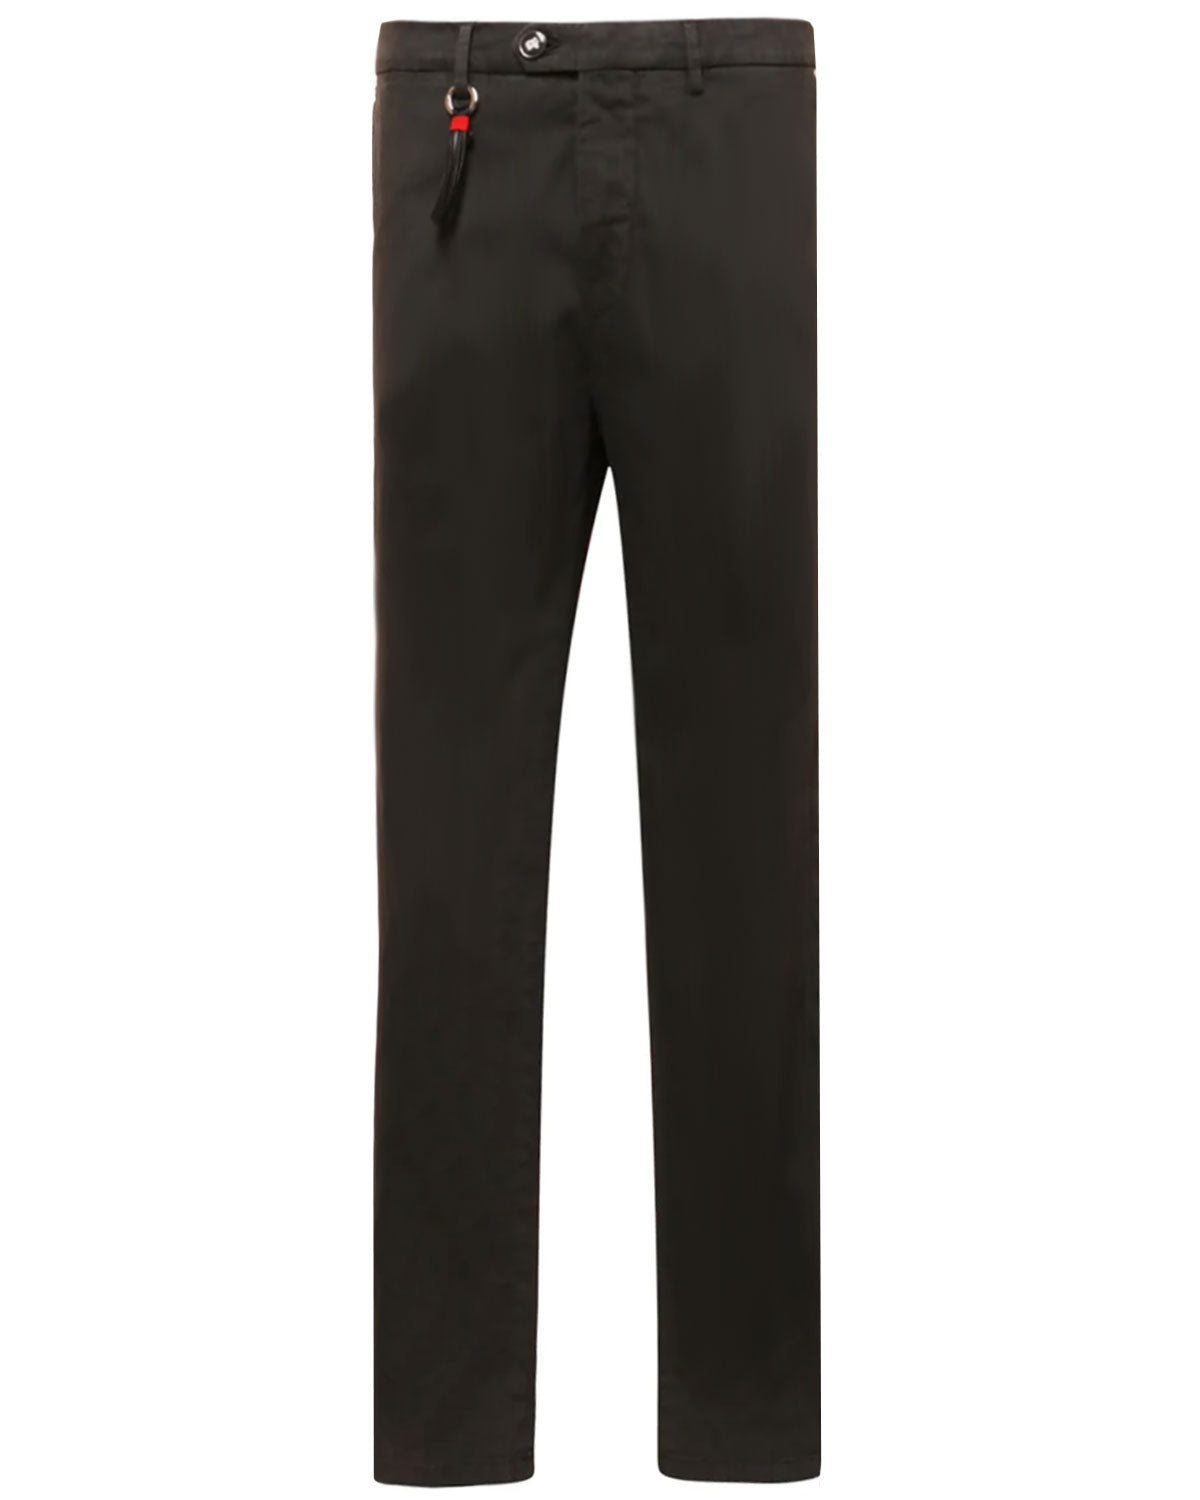 Semi Dress Flat Front 5 Pocket Pant in Charcoal